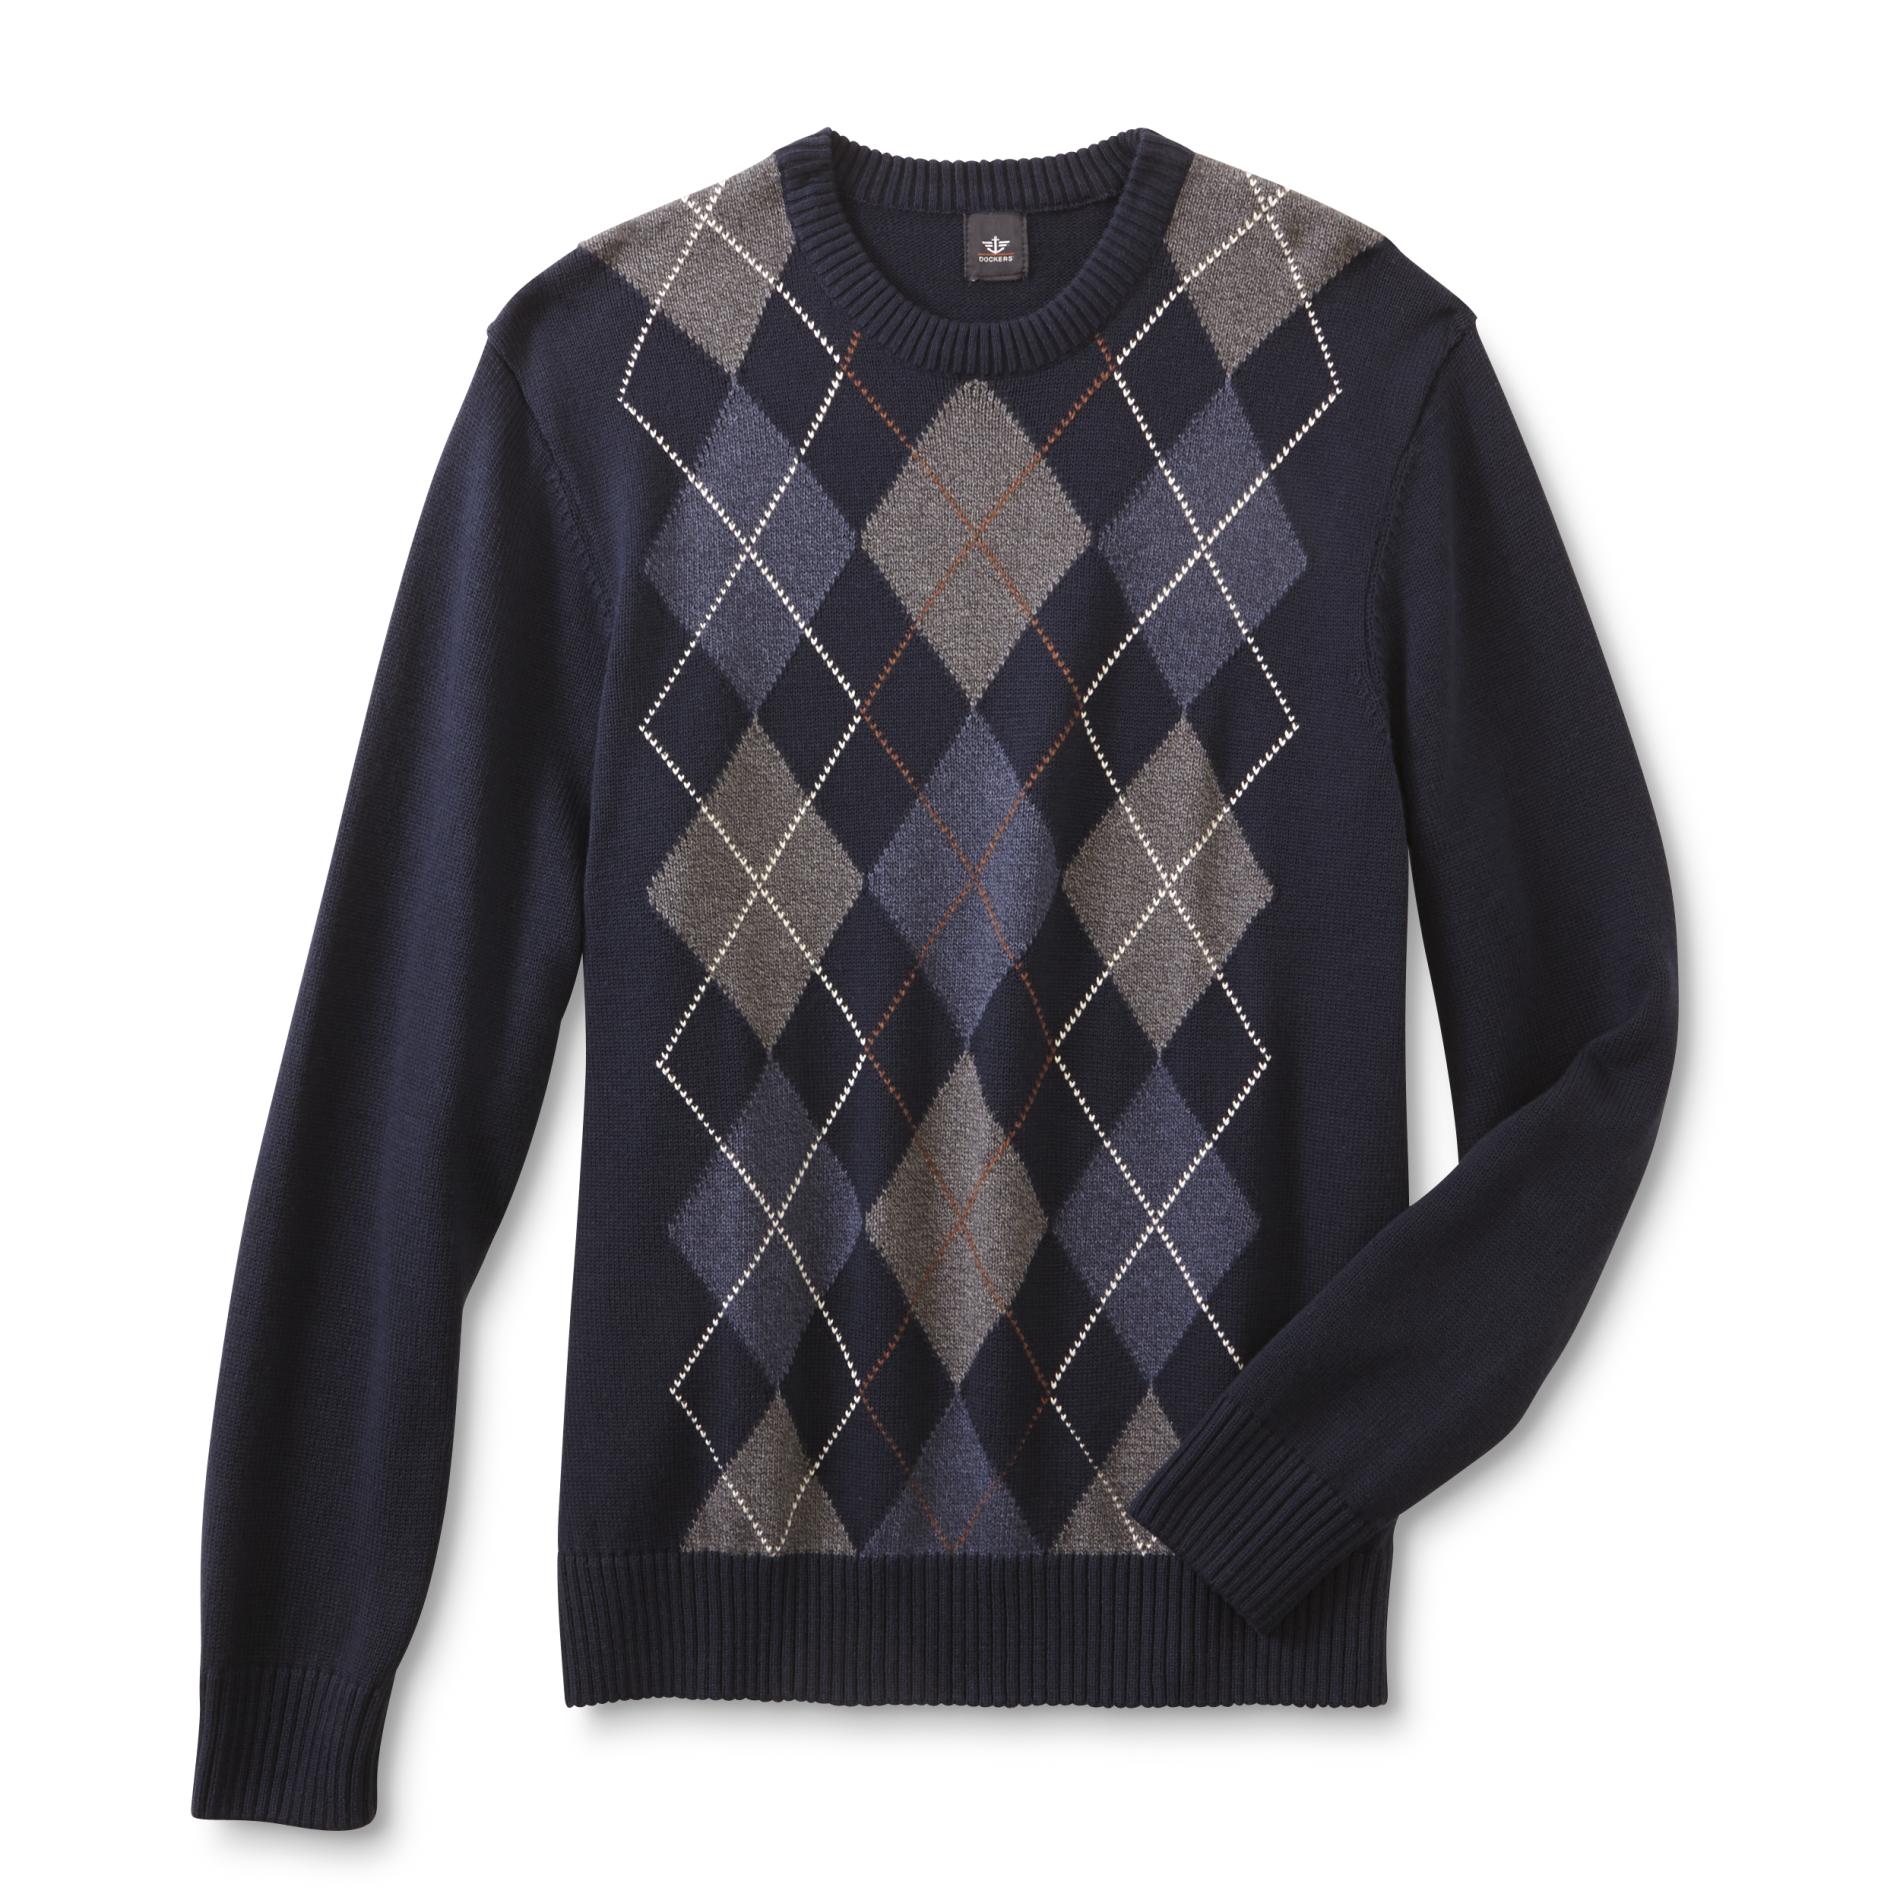 Dockers Men's Sweater - Argyle